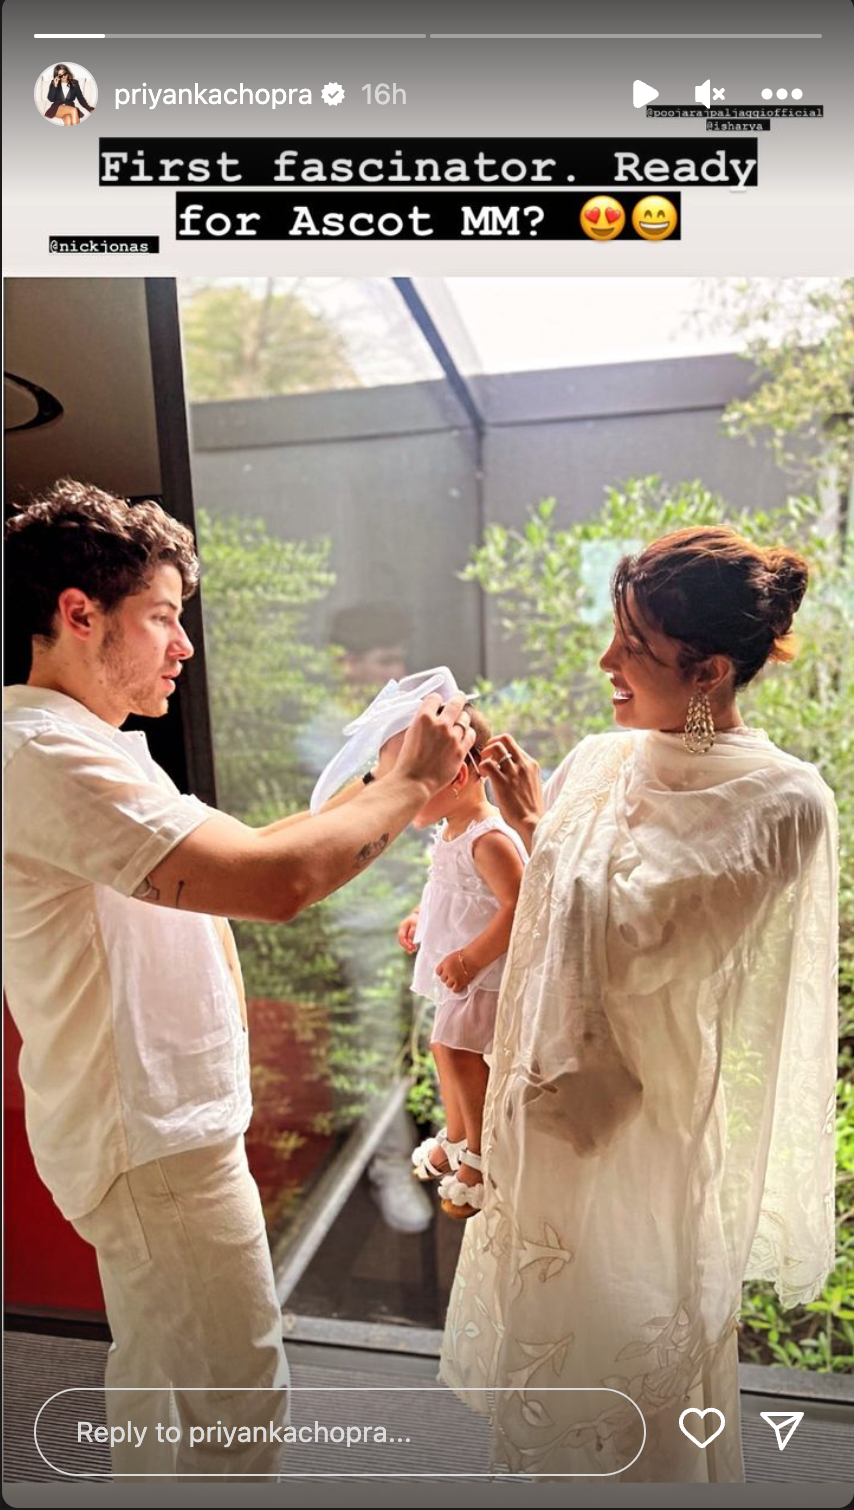 Priyanka Chopra and Nick Jonas' daughter gets first fascinator